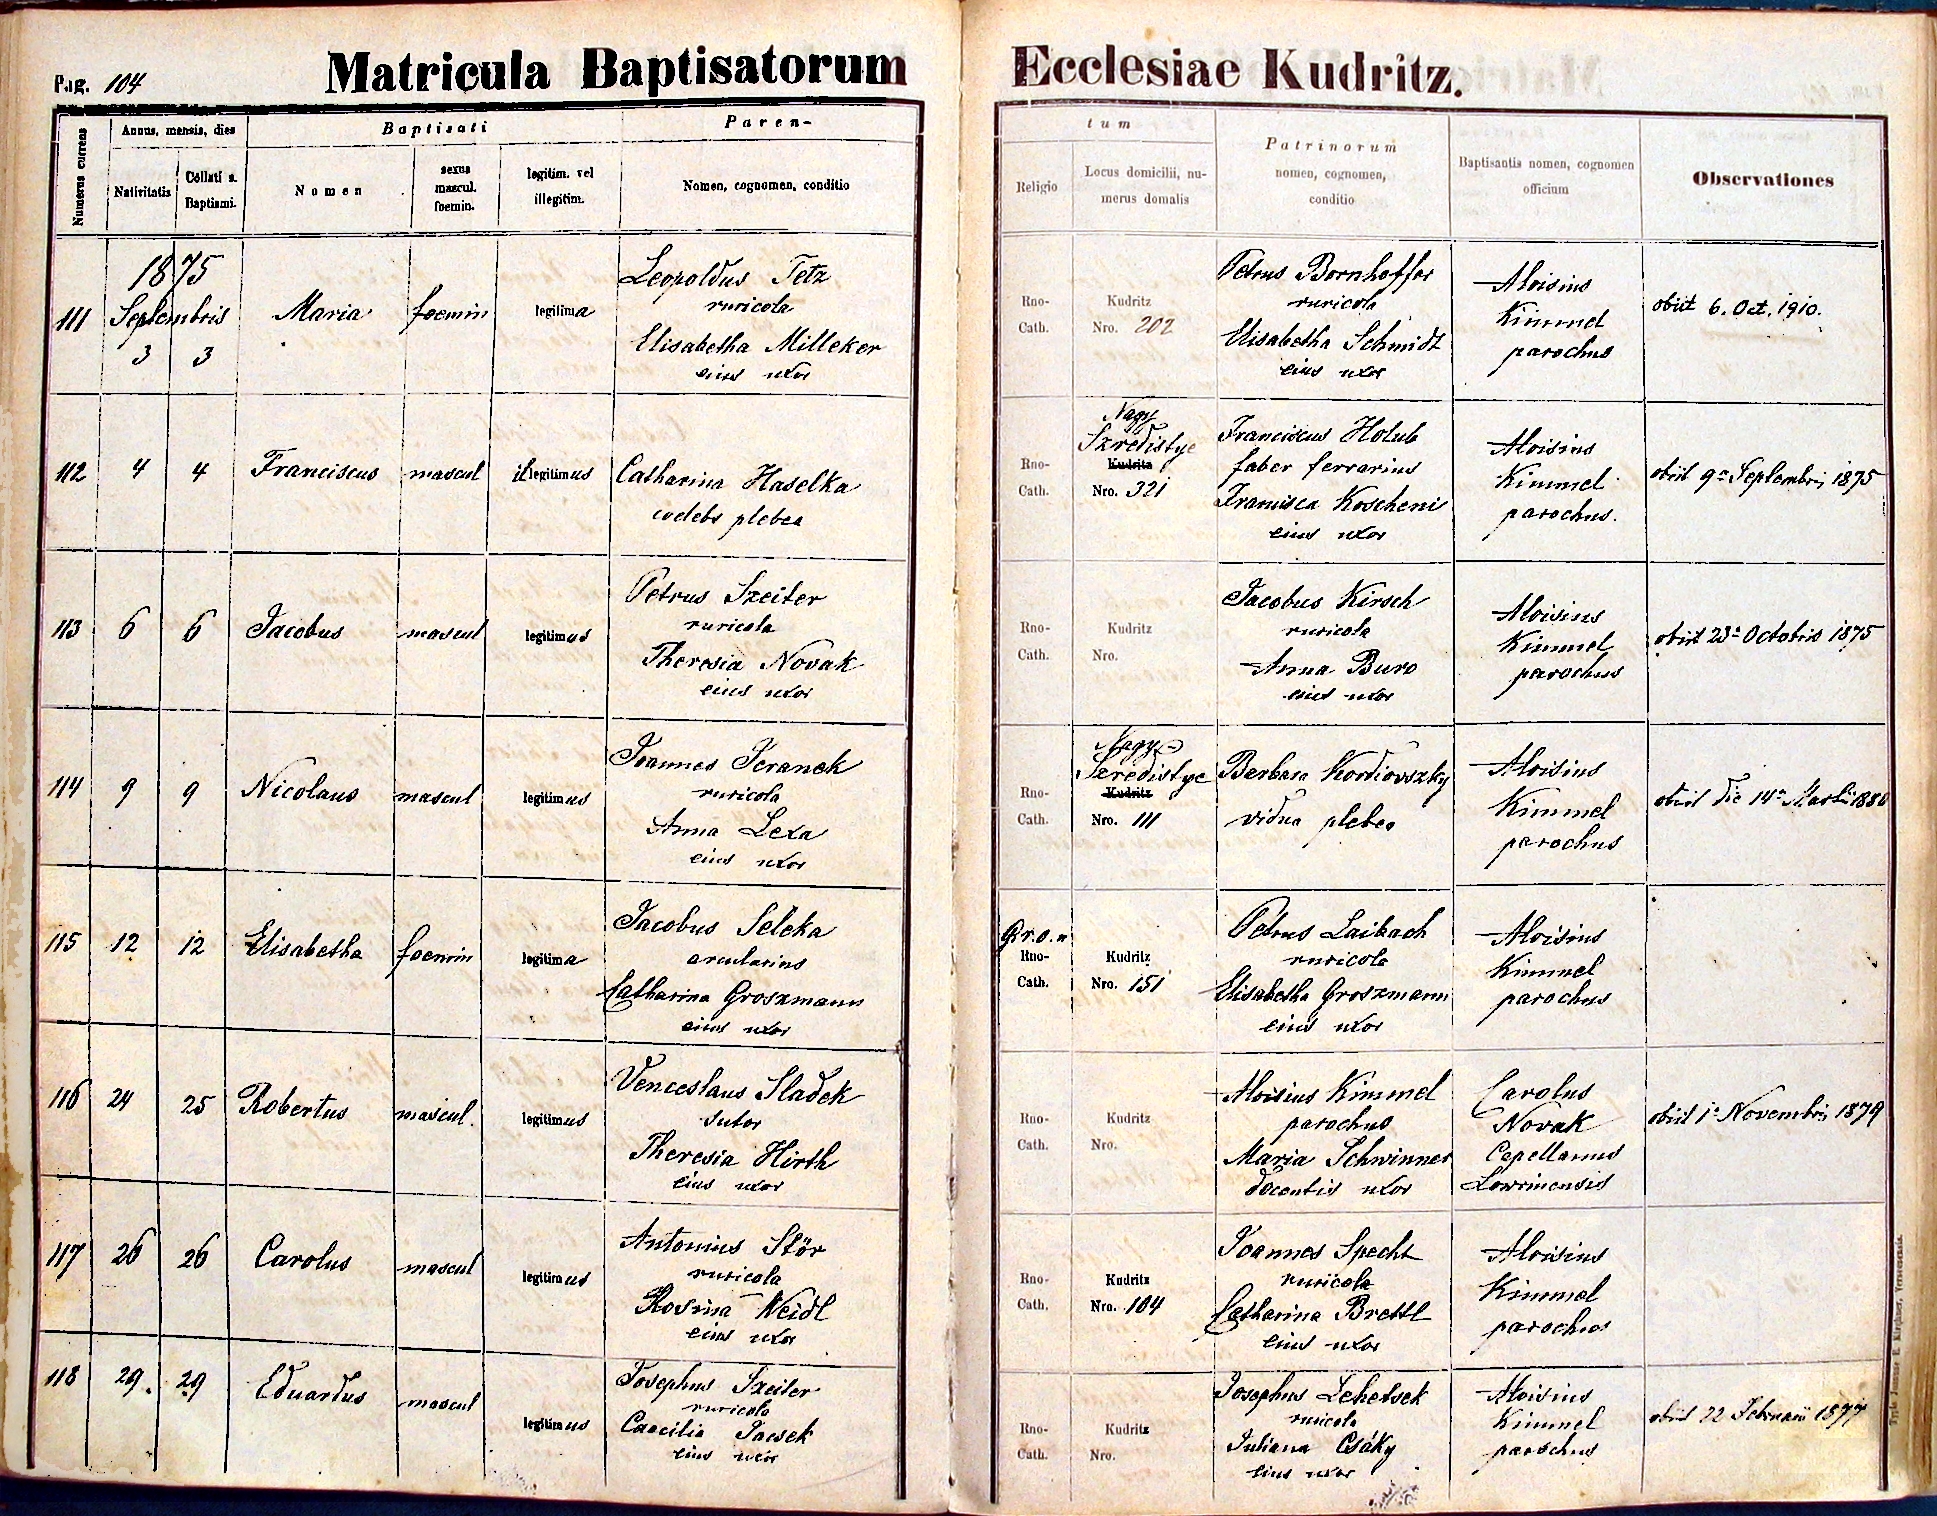 images/church_records/BIRTHS/1884-1899B/1890/104